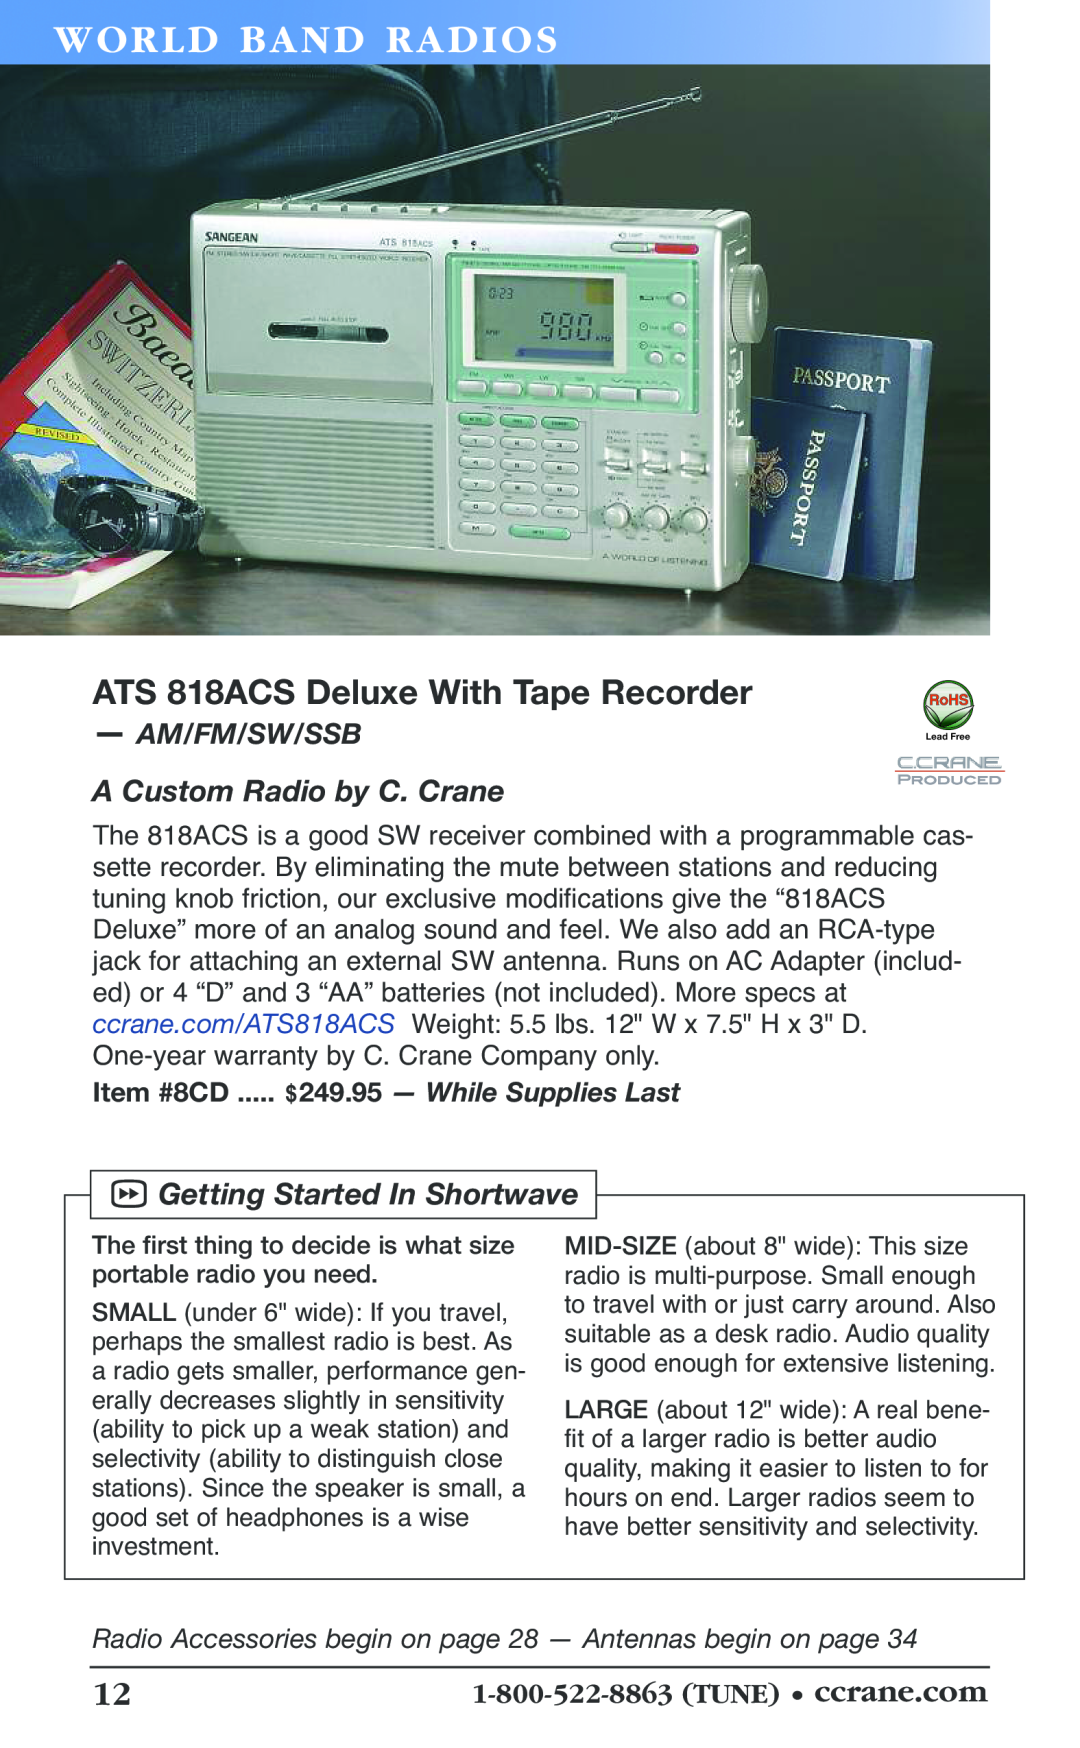 C. Crane 19f Wor Ld Band Radi Os, ATS 818ACS Deluxe With Tape Recorder, A Custom Radio by C. Crane, Am/Fm/Sw/Ssb, Large 